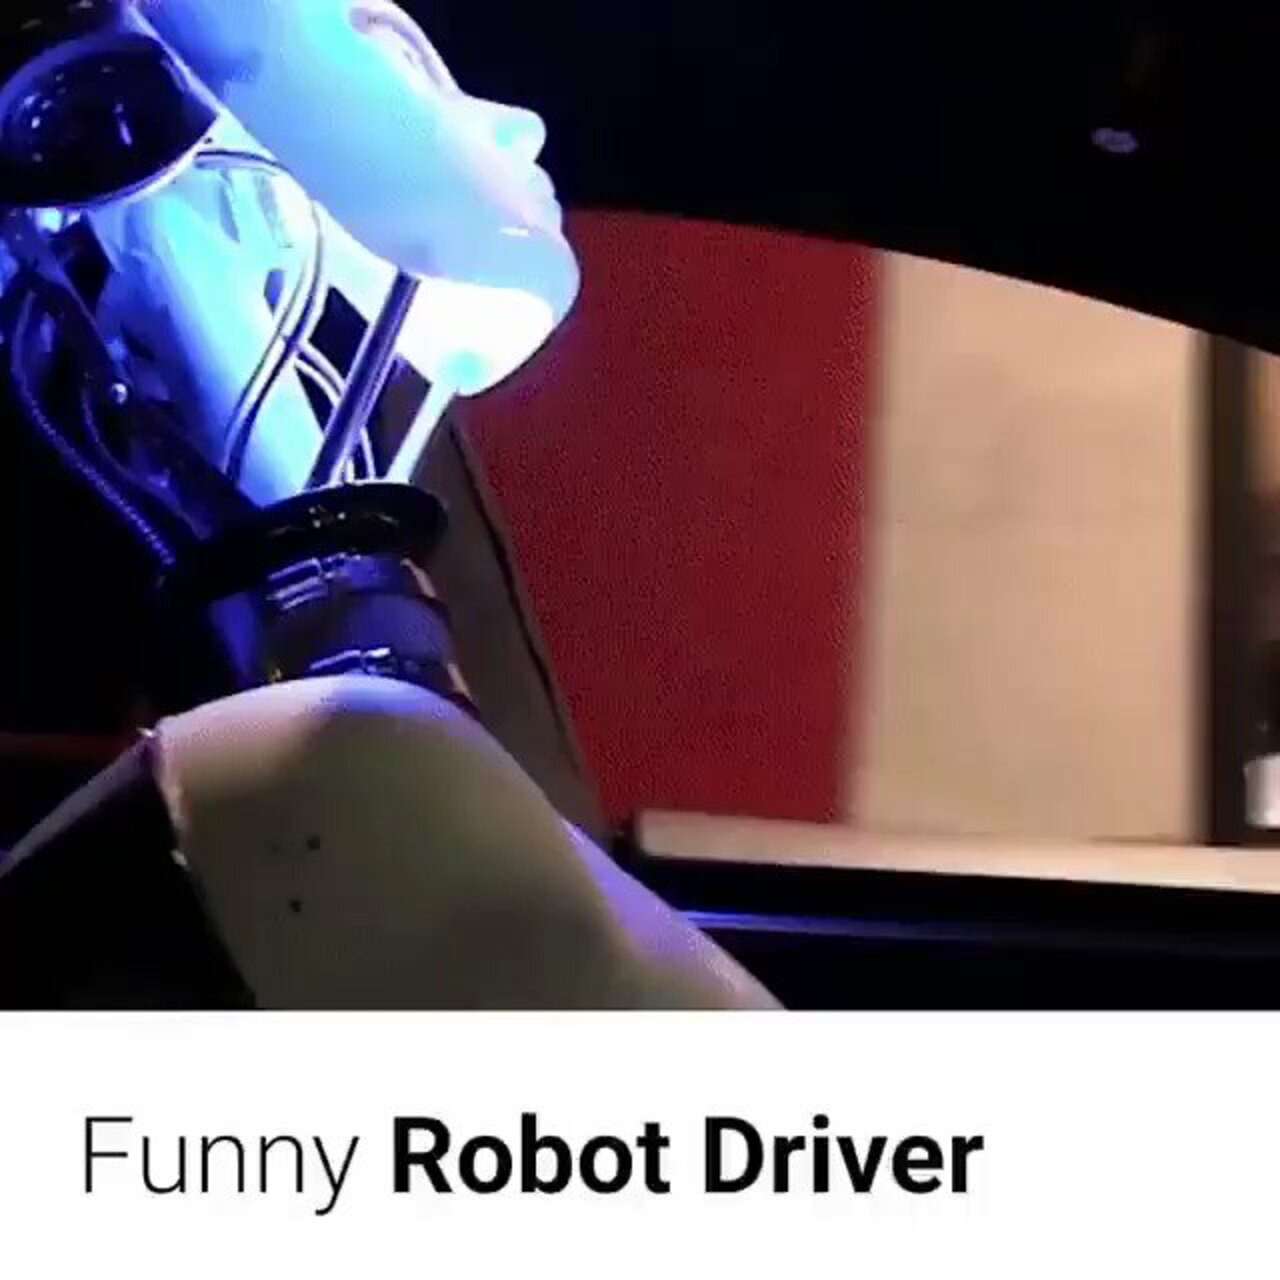 Funny #Robot Driver.  By @SteveandElon #SundayFunday #AI #Robotics #Tbt #Socialmedia #innovation #4IR #Tech  Cc: @LoriMoreno @mvollmer1 @JolaBurnett @digitalcloudgal @JBarbosaPR @MikeQuindazzi @HaroldSinnott @DrJDrooghaag @labordeolivier @debraruh @AshokNellikar @Harry_Robots https://t.co/WTHW7Ym0Mx